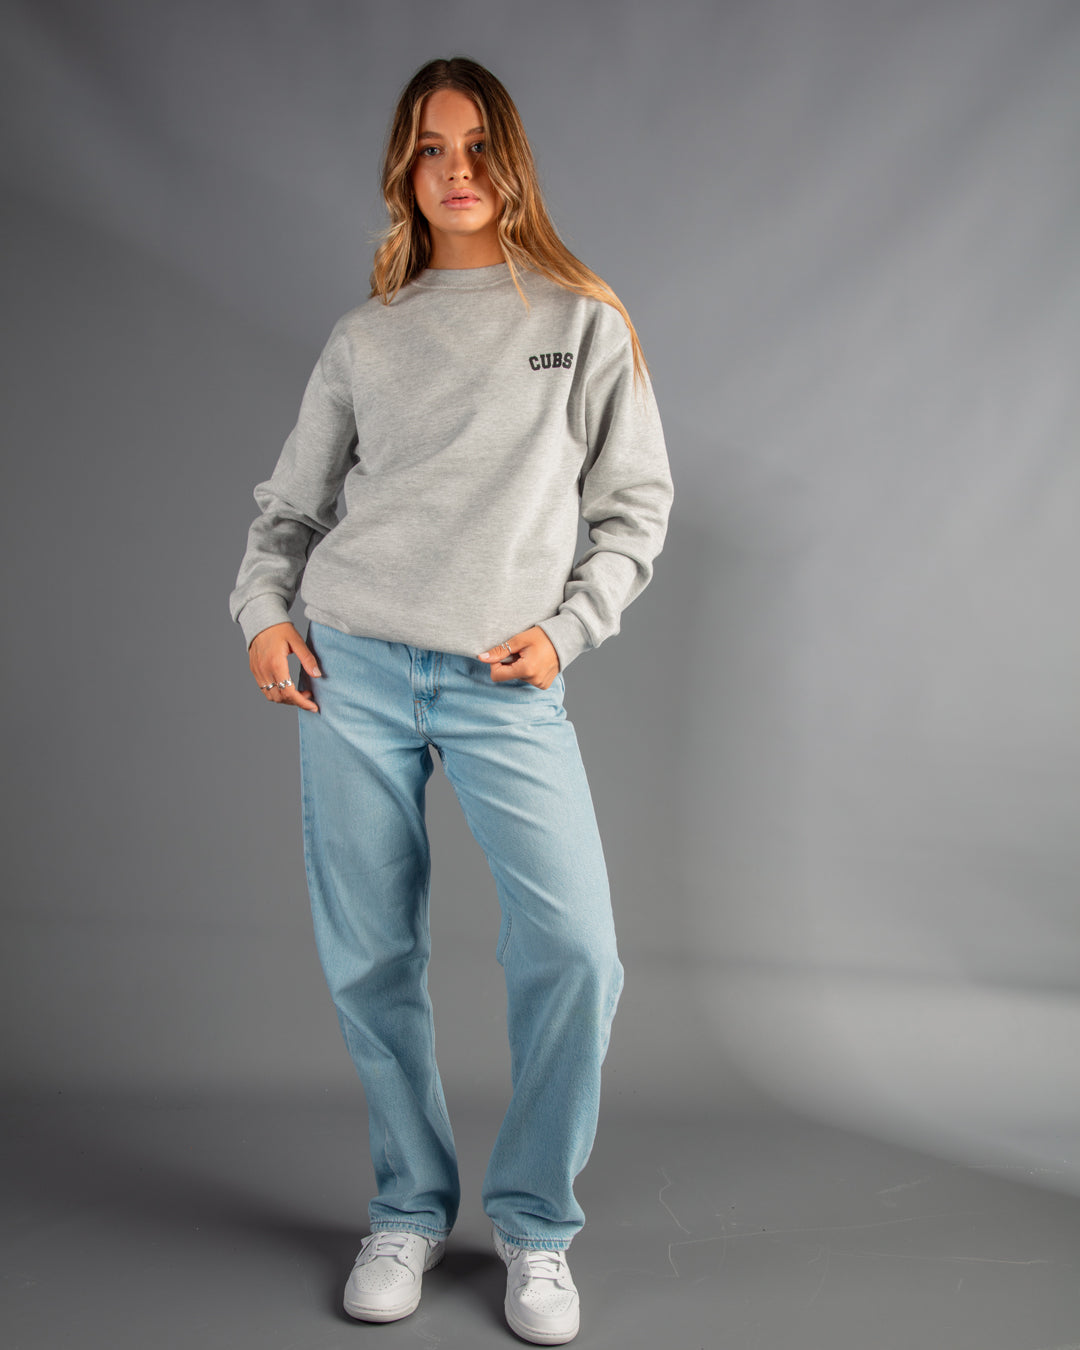 College Jnr Sweatshirt - Grey